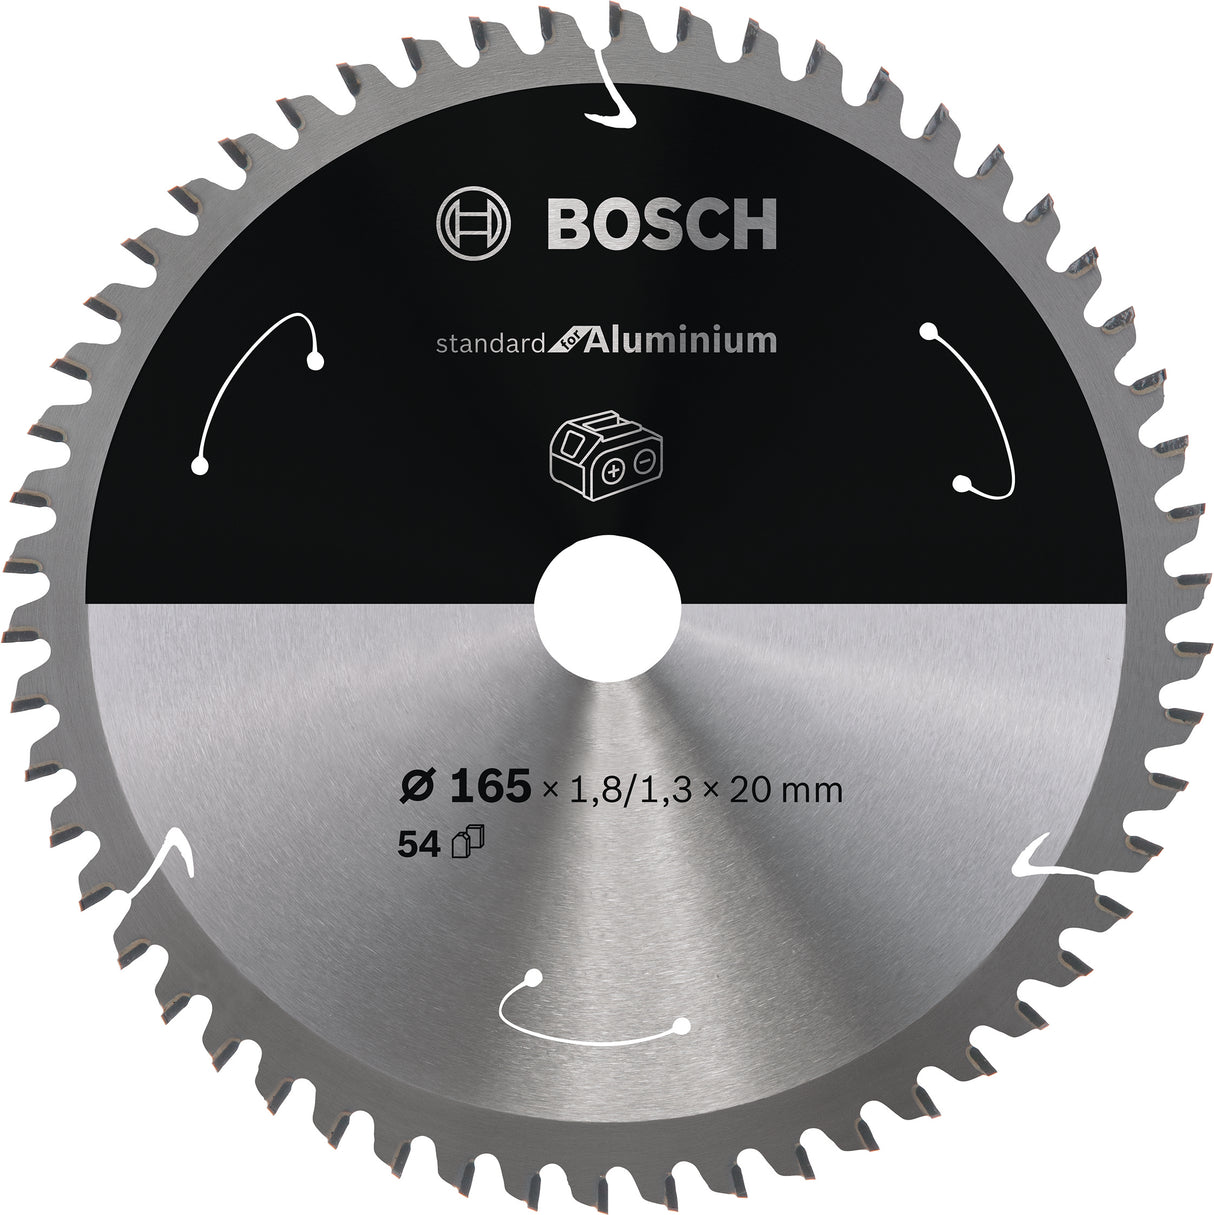 Bosch Professional Aluminium Circular Saw Blade for Cordless Saws - 165x1.8/1.3x20 T54 - Standard Grade